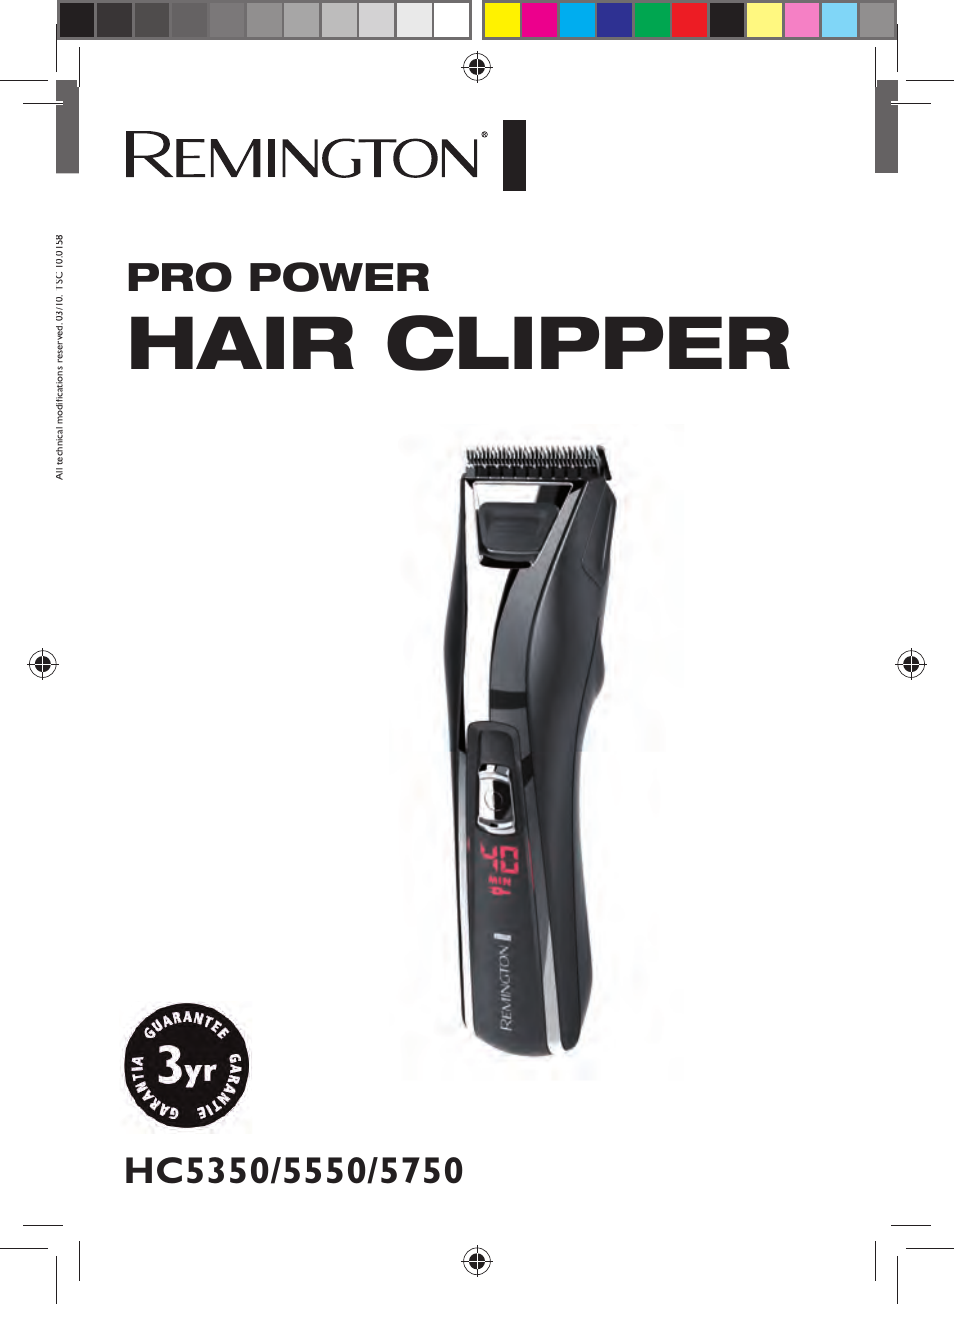 Hair clipper, Pro power | Remington HC5750 User Manual | Page 2 / 162